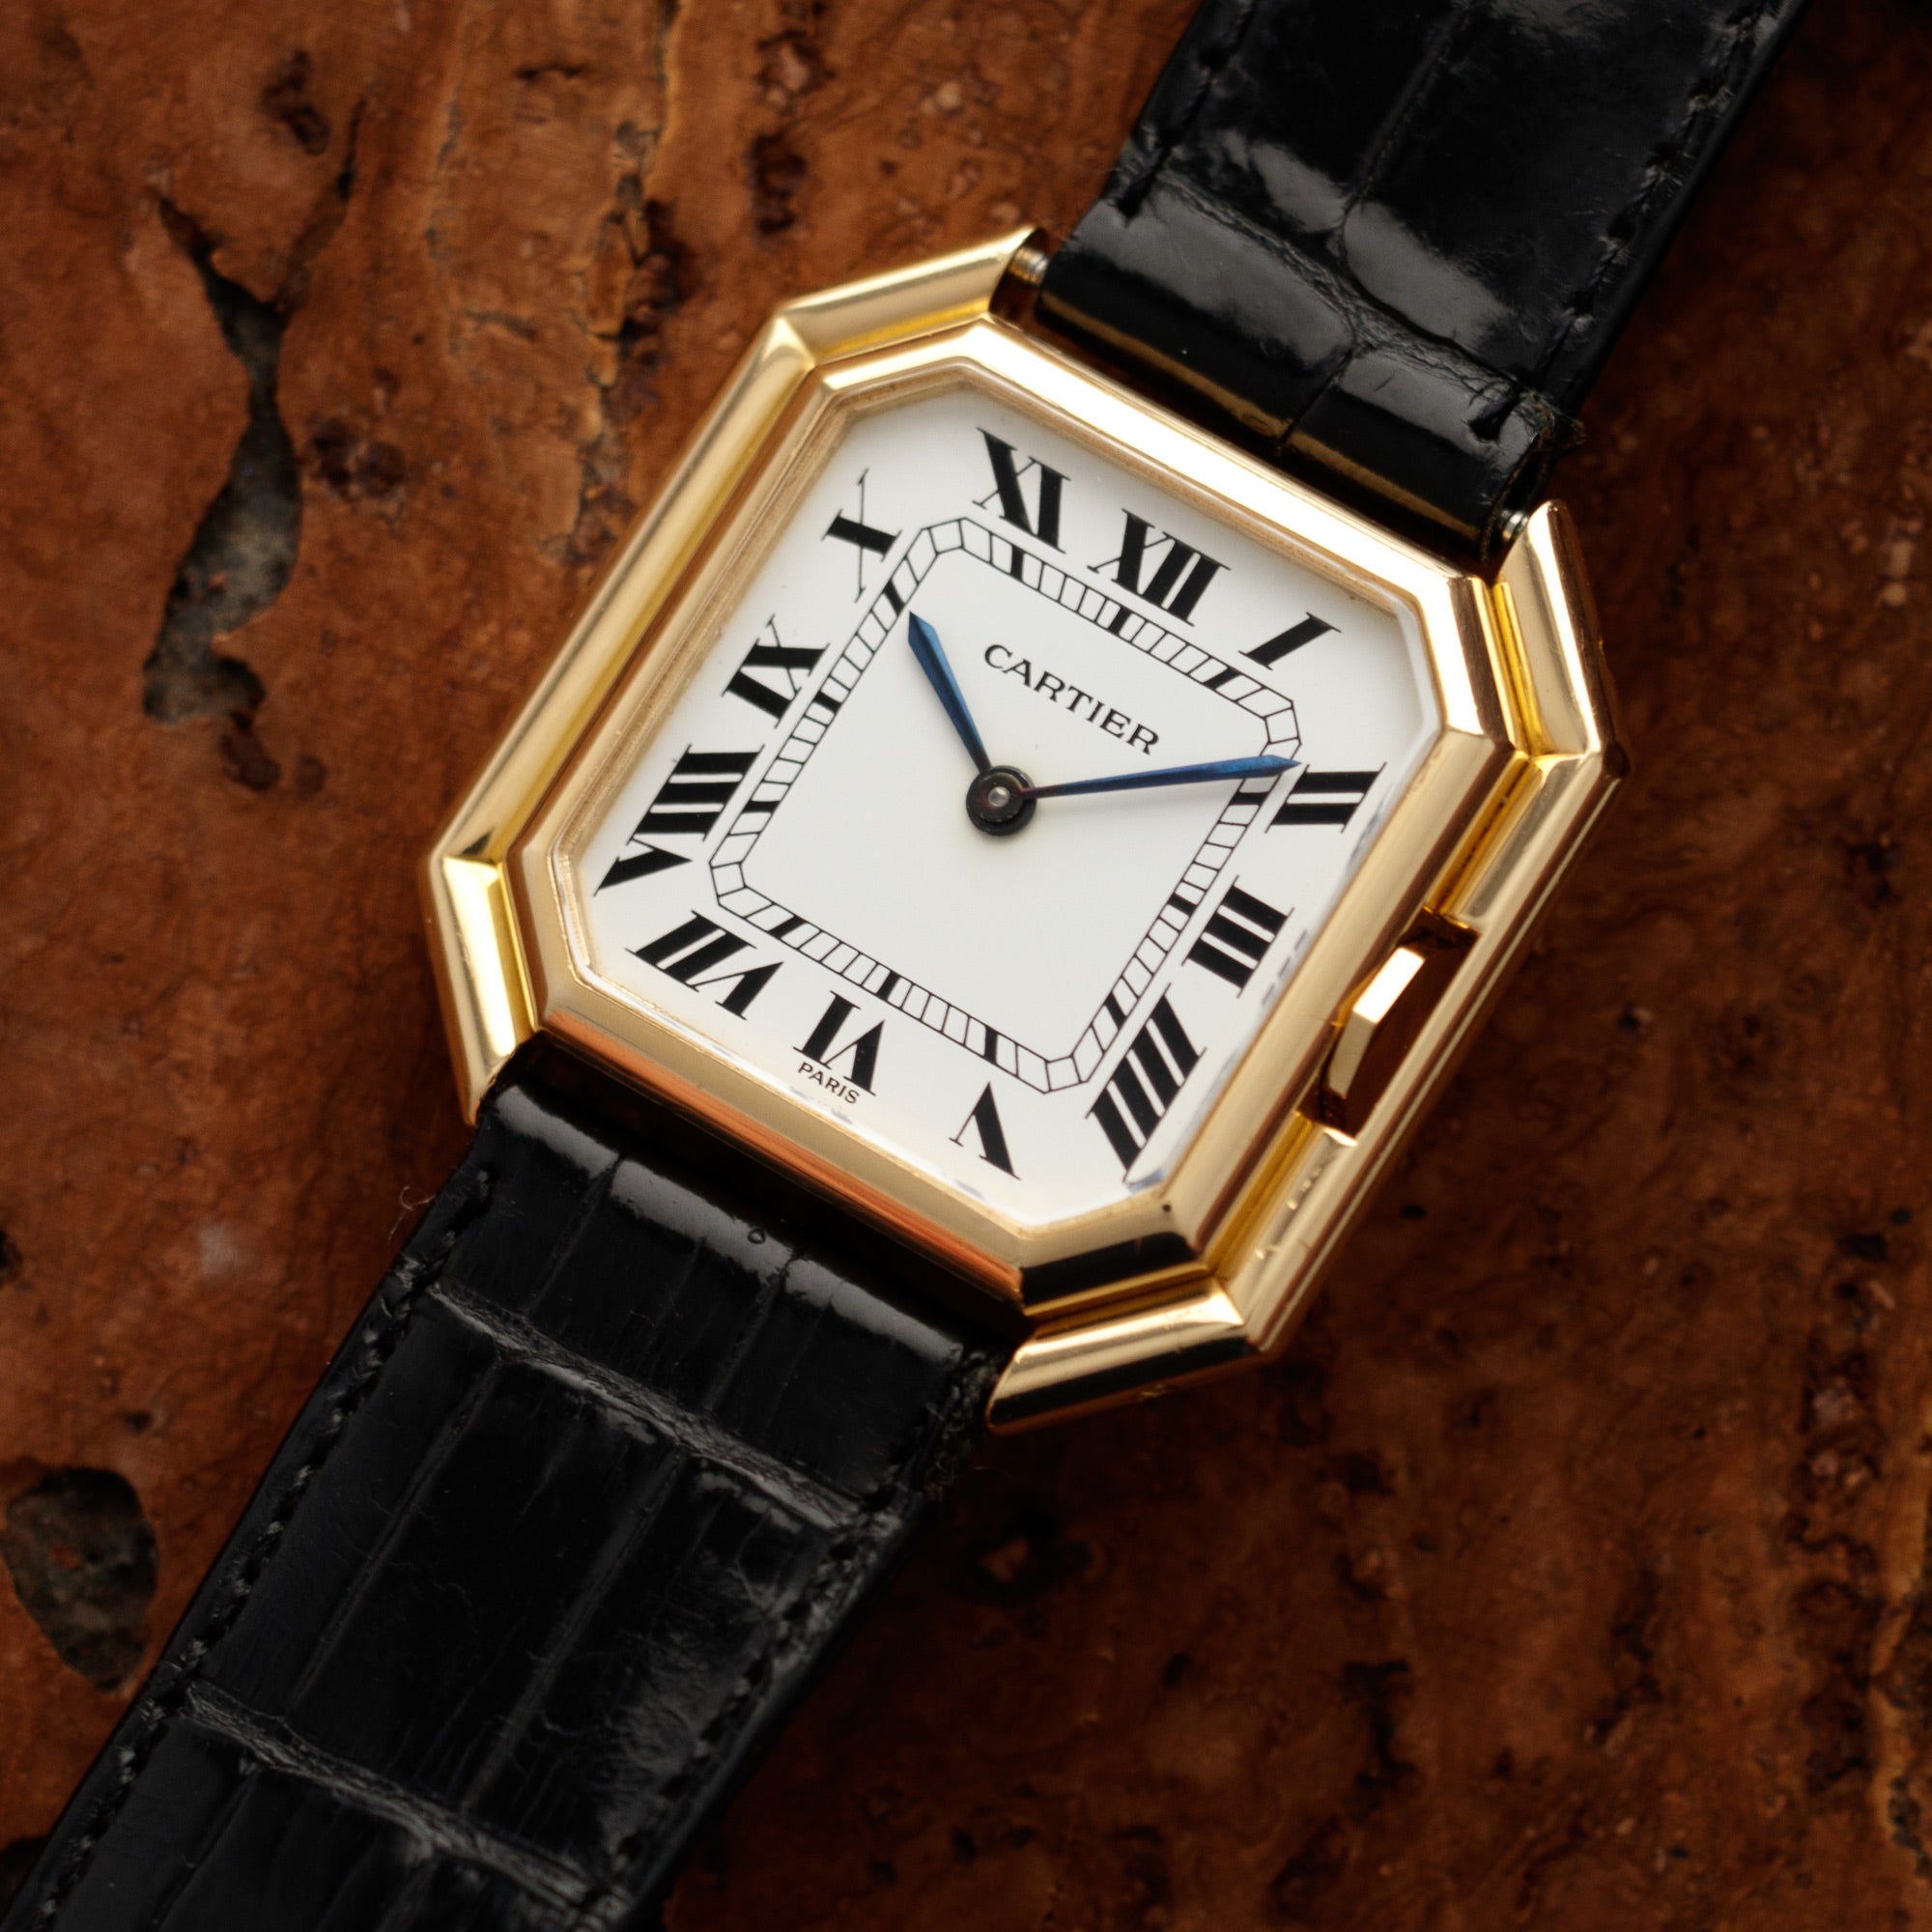 Cartier - Cartier Yellow Gold Ceinture Automatique Watch - The Keystone Watches